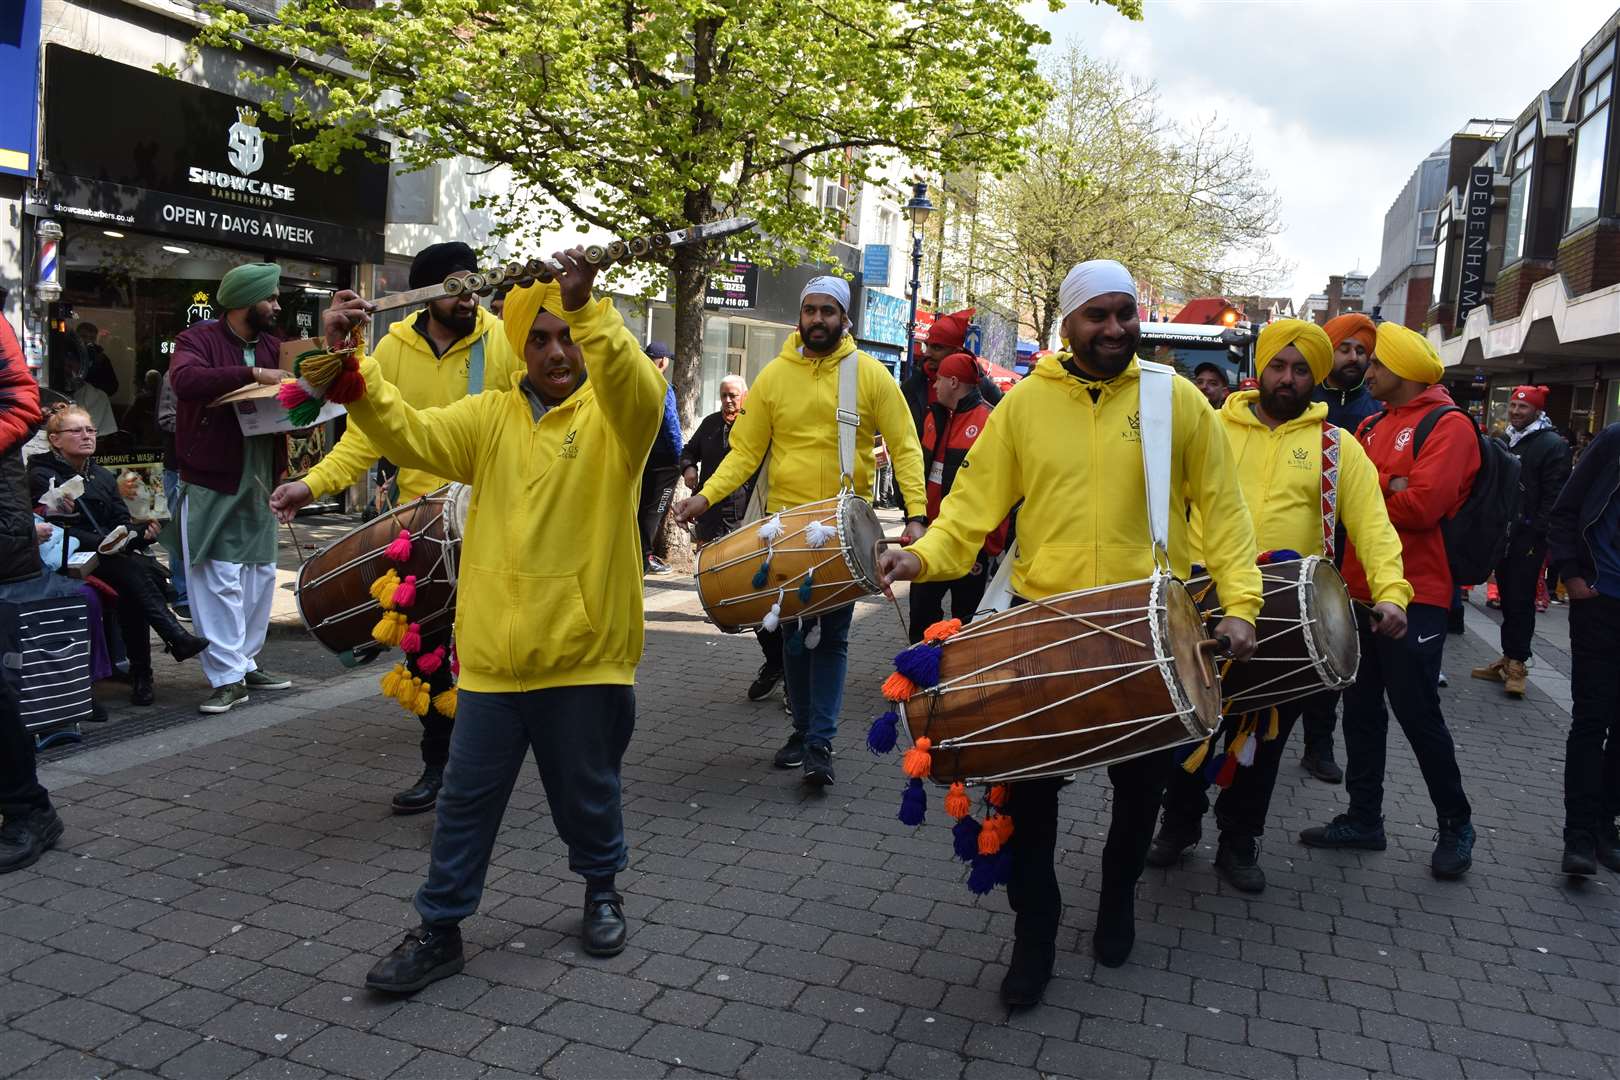 The procession went through Gravesend town centre. Credit: Jason Arthur